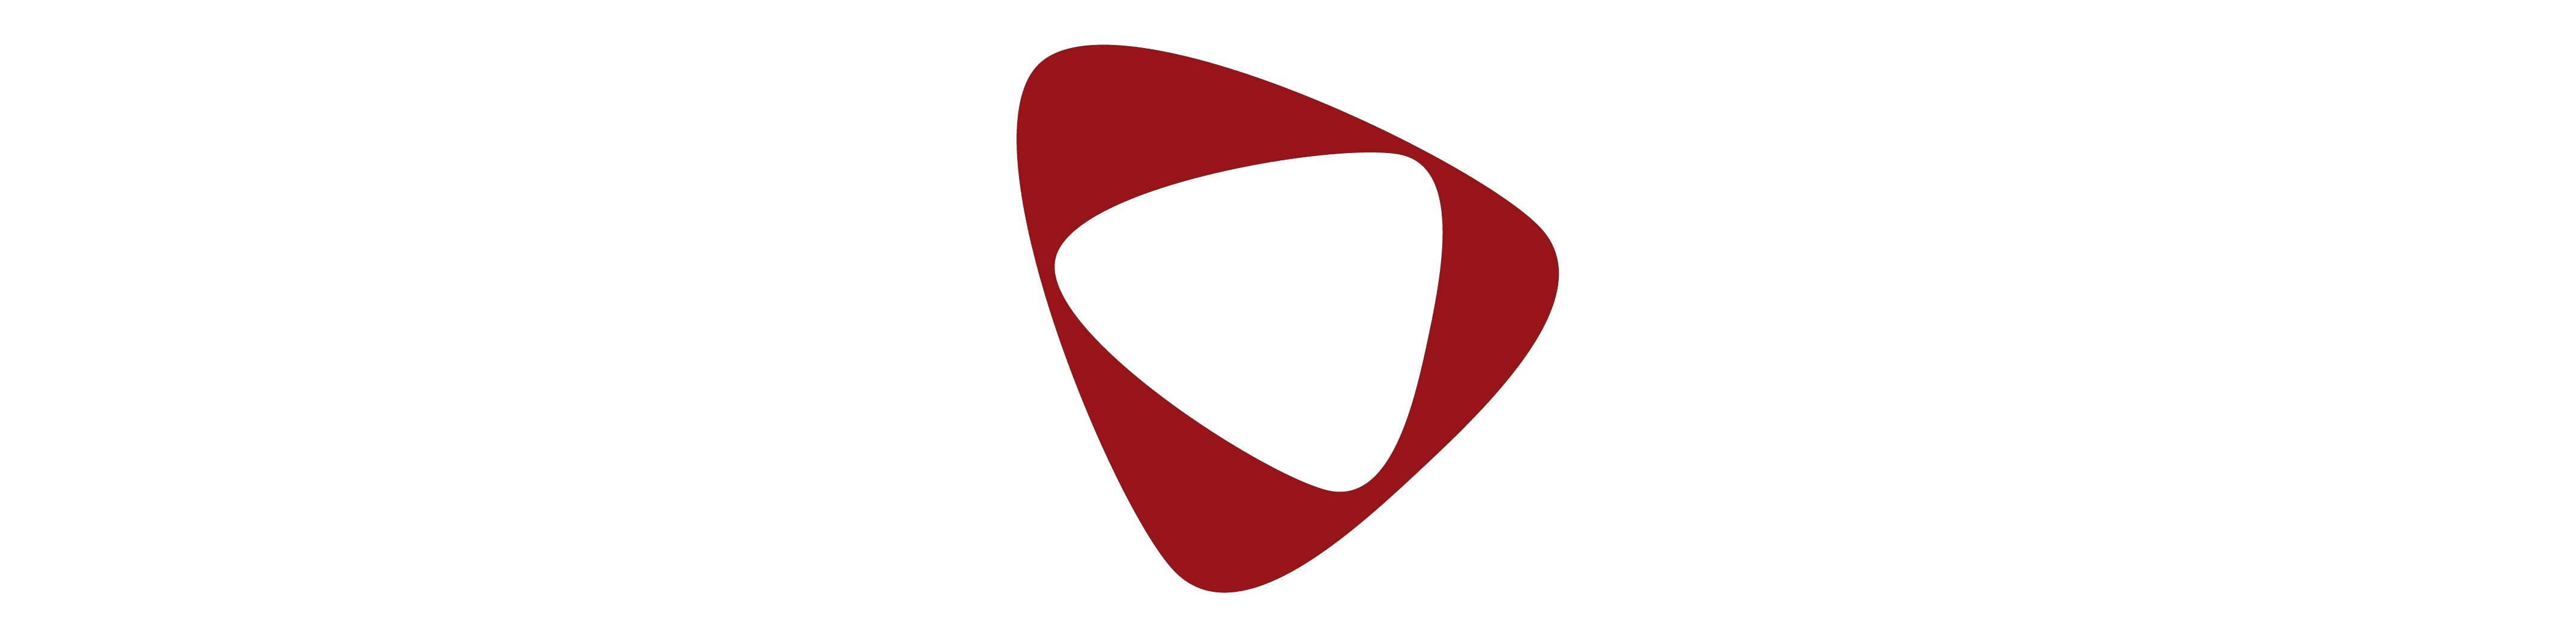 LCI logotipo 2018